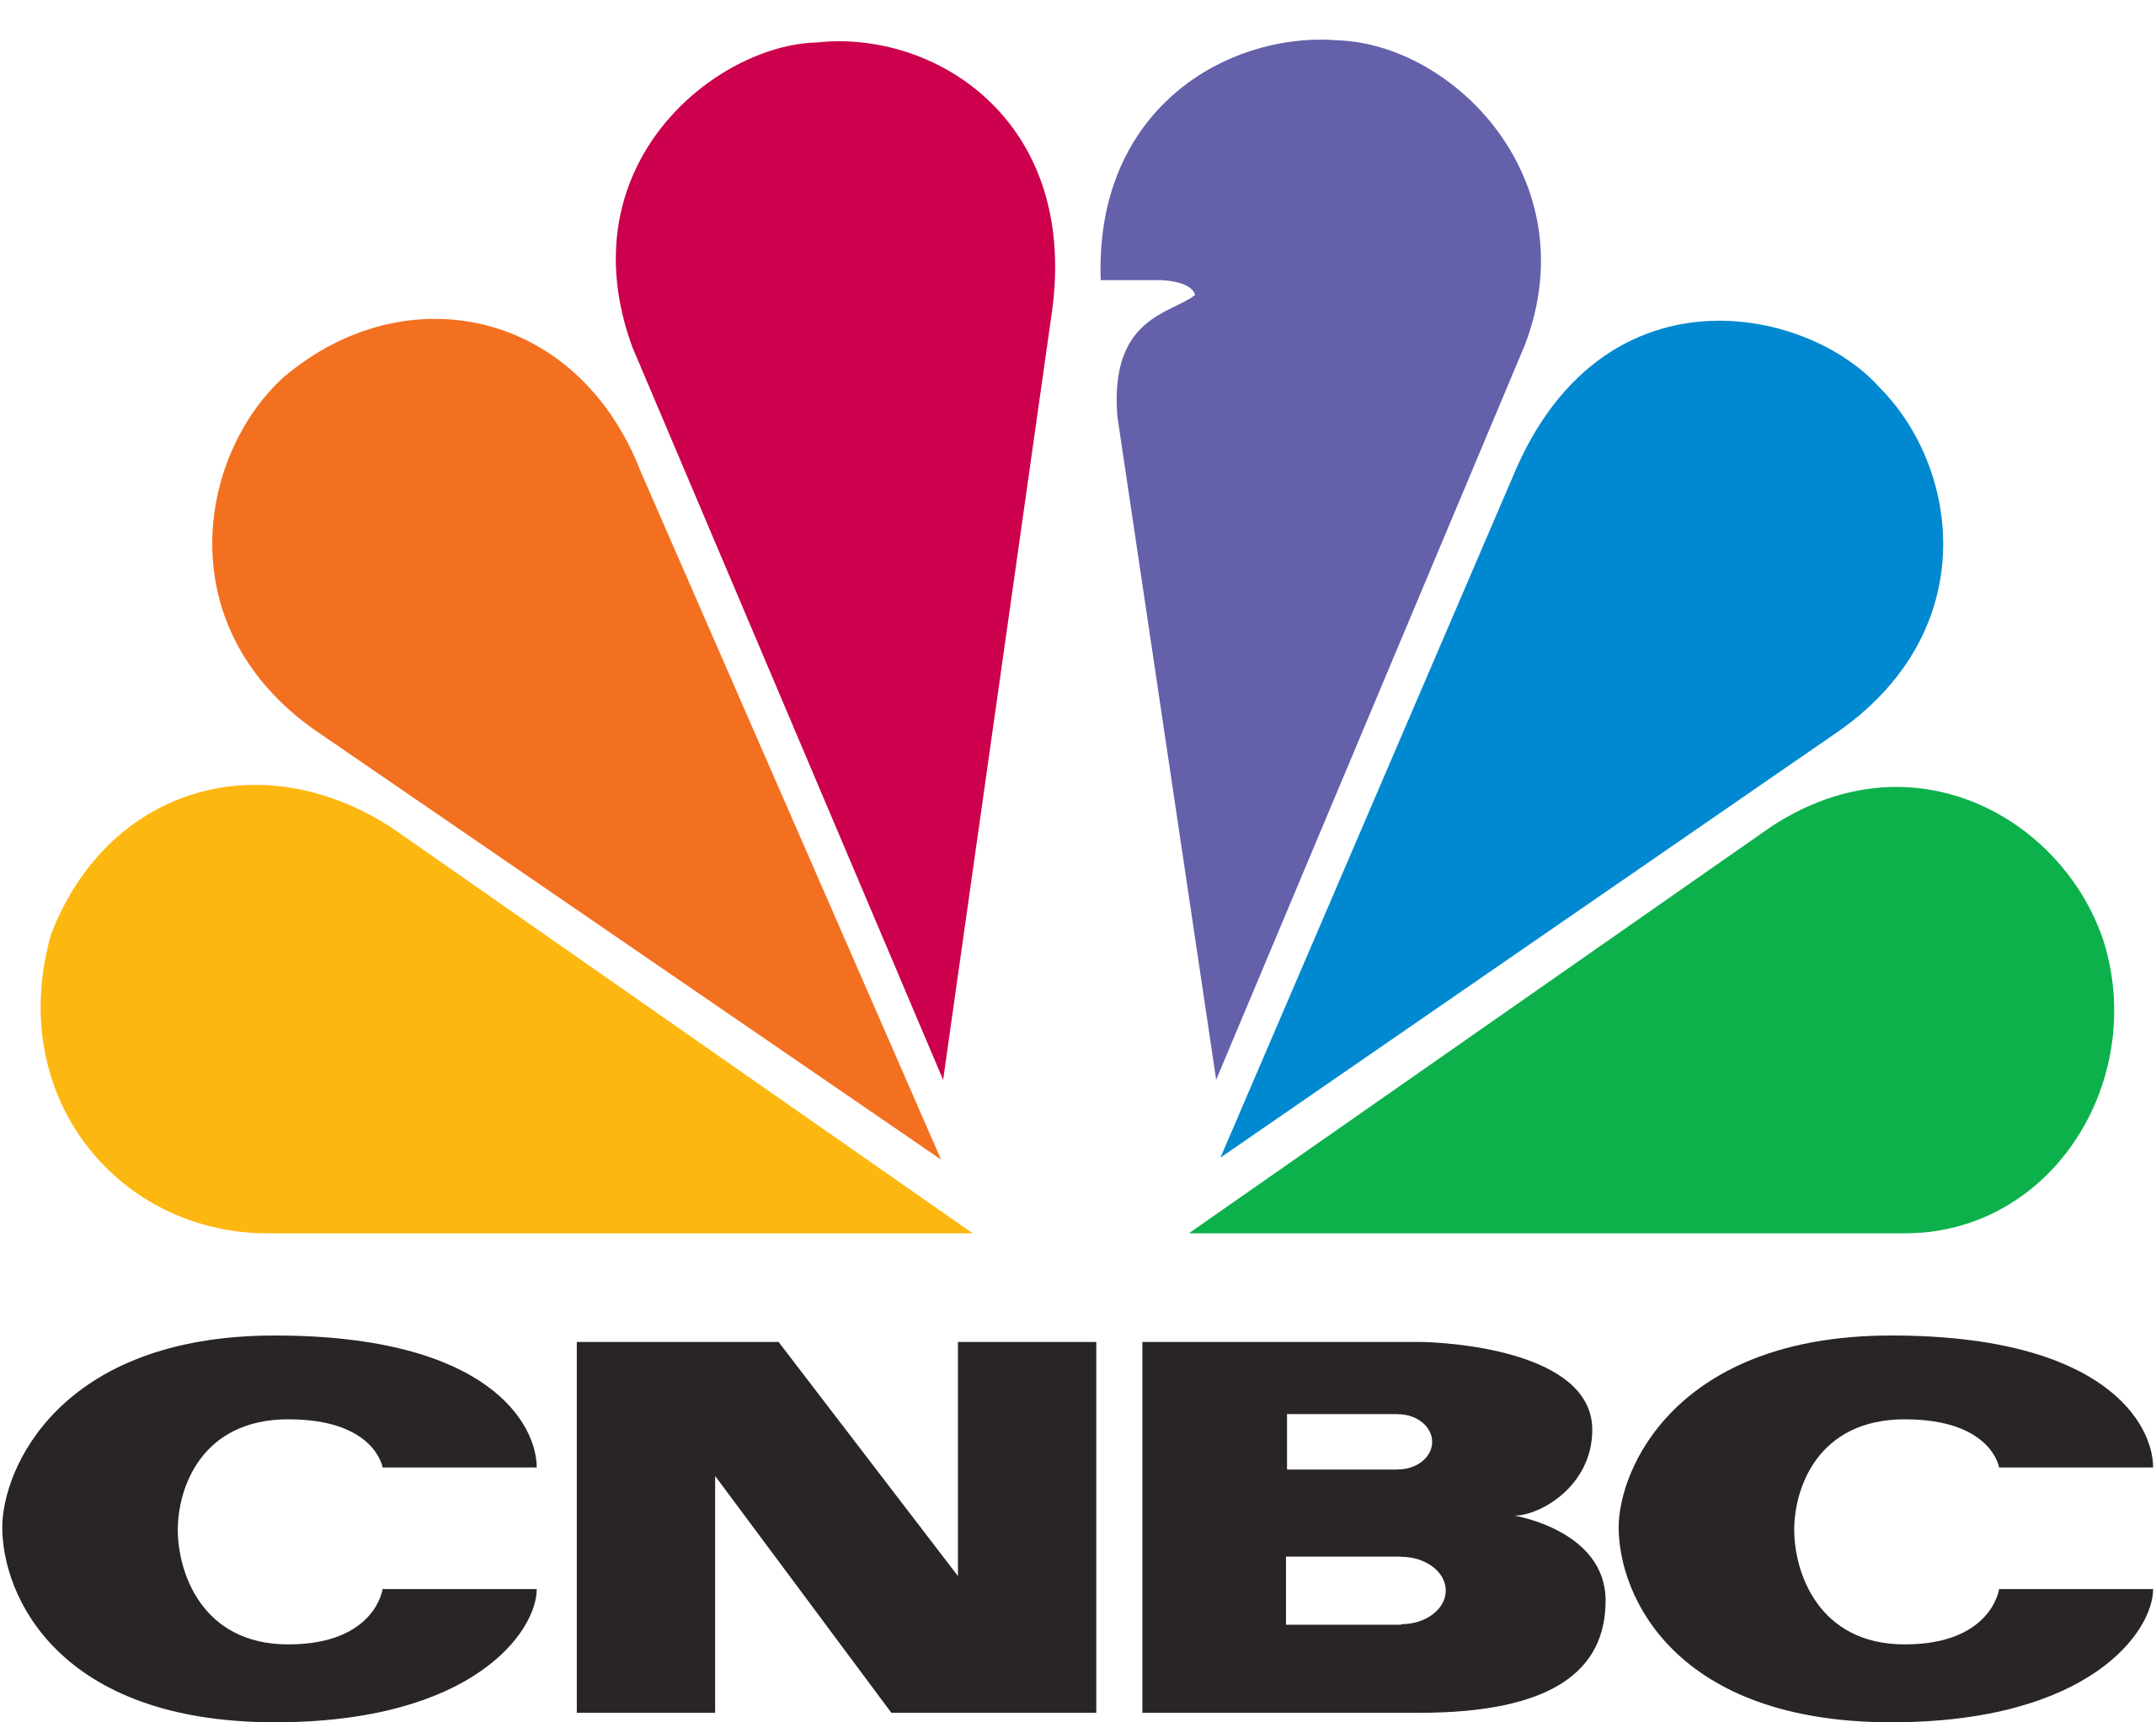 2560px-CNBC_logo.svg (1)